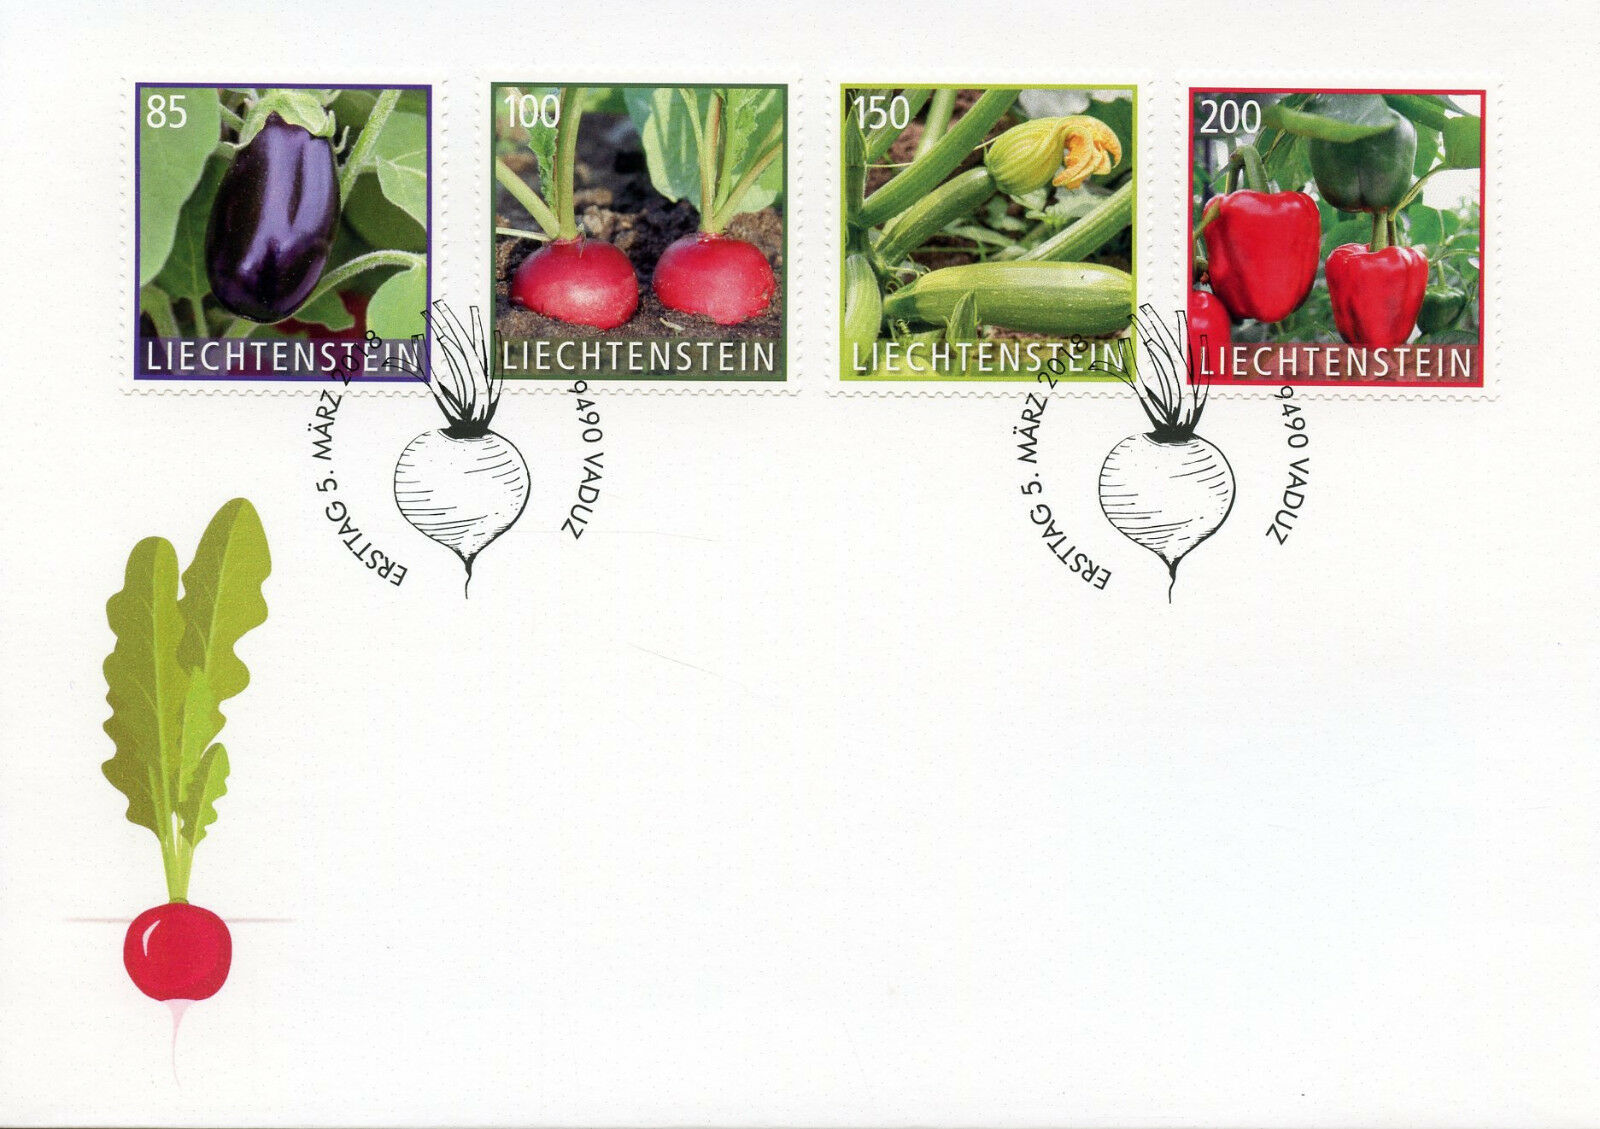 Liechtenstein 2018 FDC Crop Plants Vegetables 4v Set Cover Nature Stamps